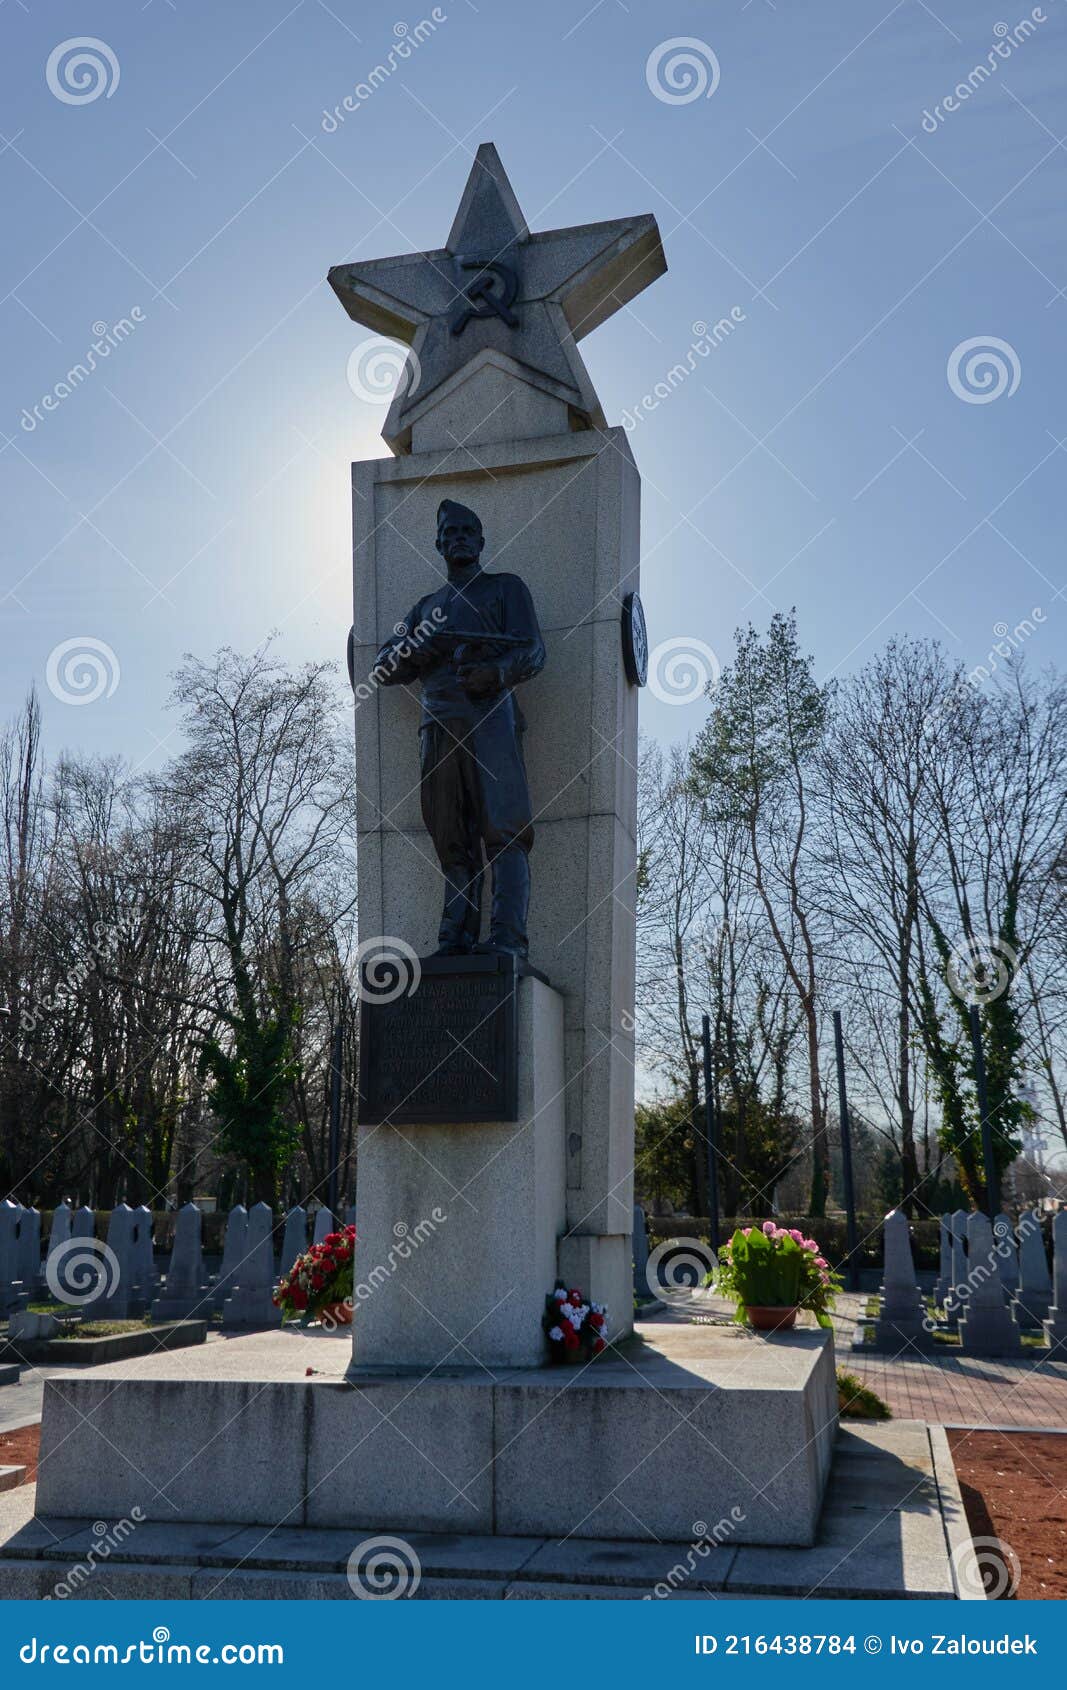 prague, czech republic-march 30, 2021 - prague war cemetery 1939-1945. its centrepiece is the monument to the 436 soviet soldiers